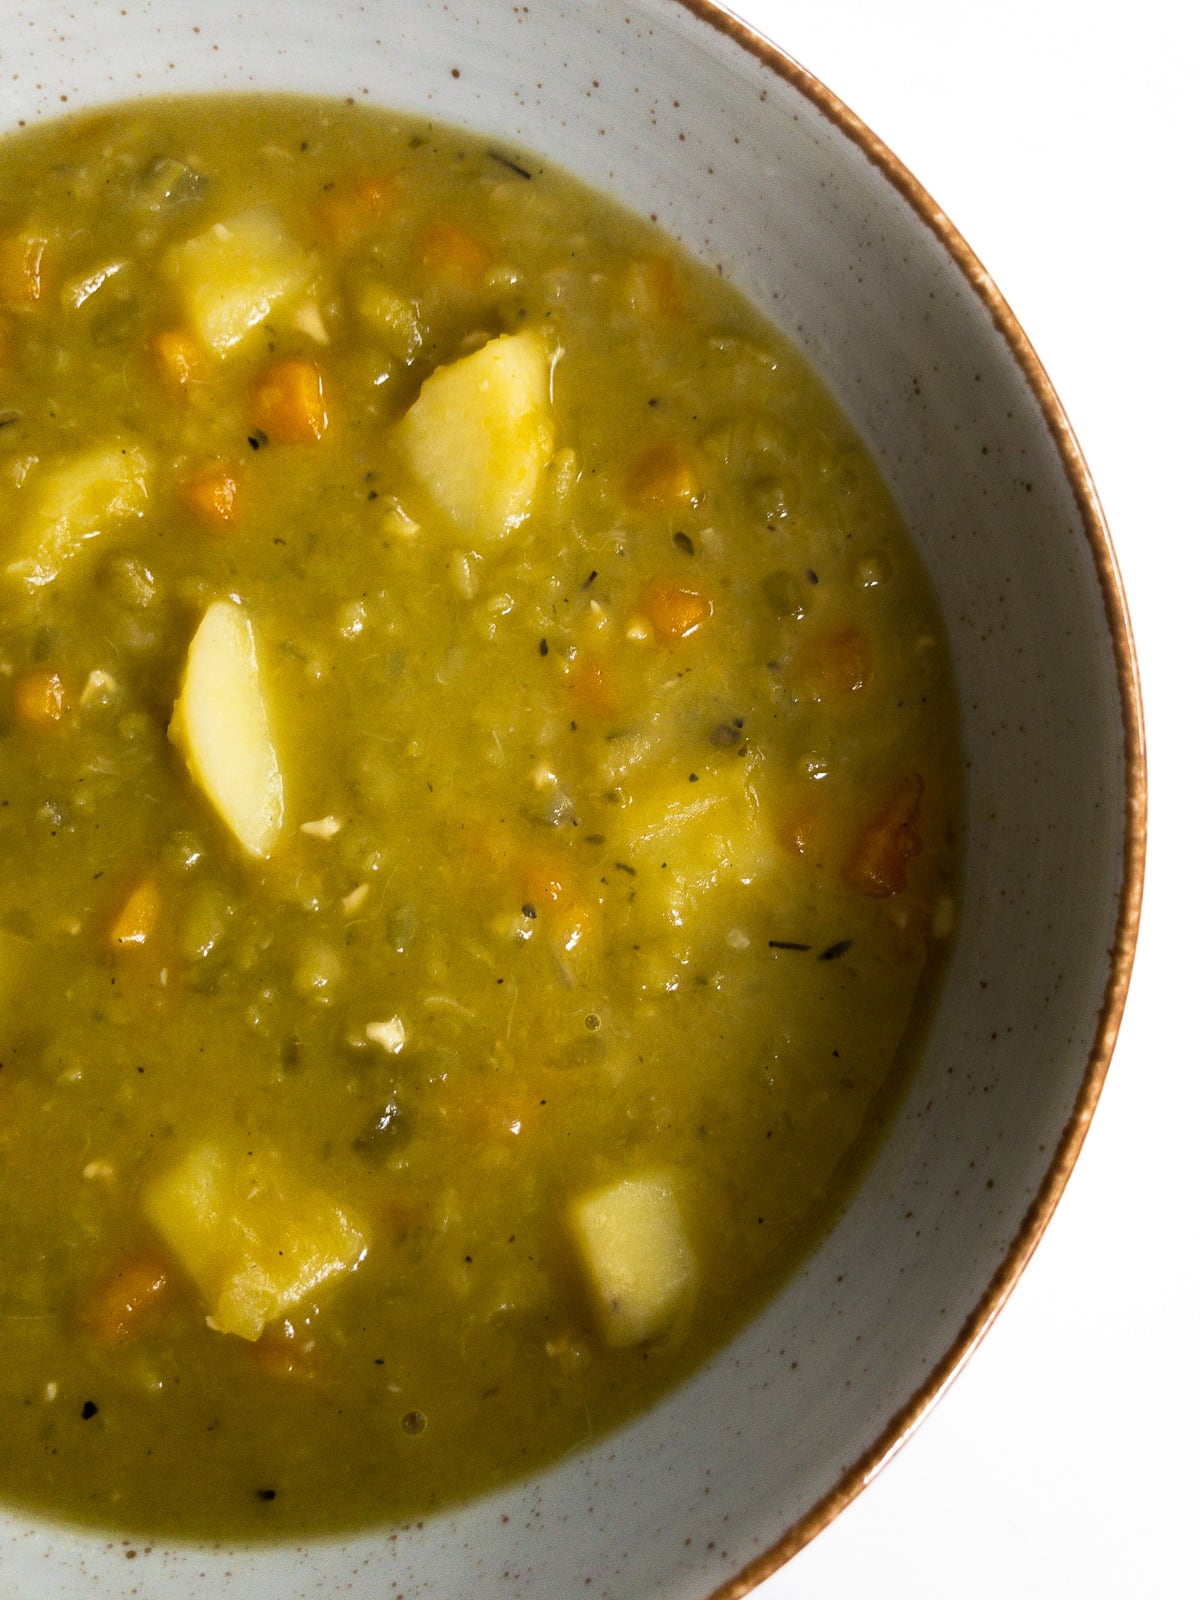 vegan split pea soup in a bowl